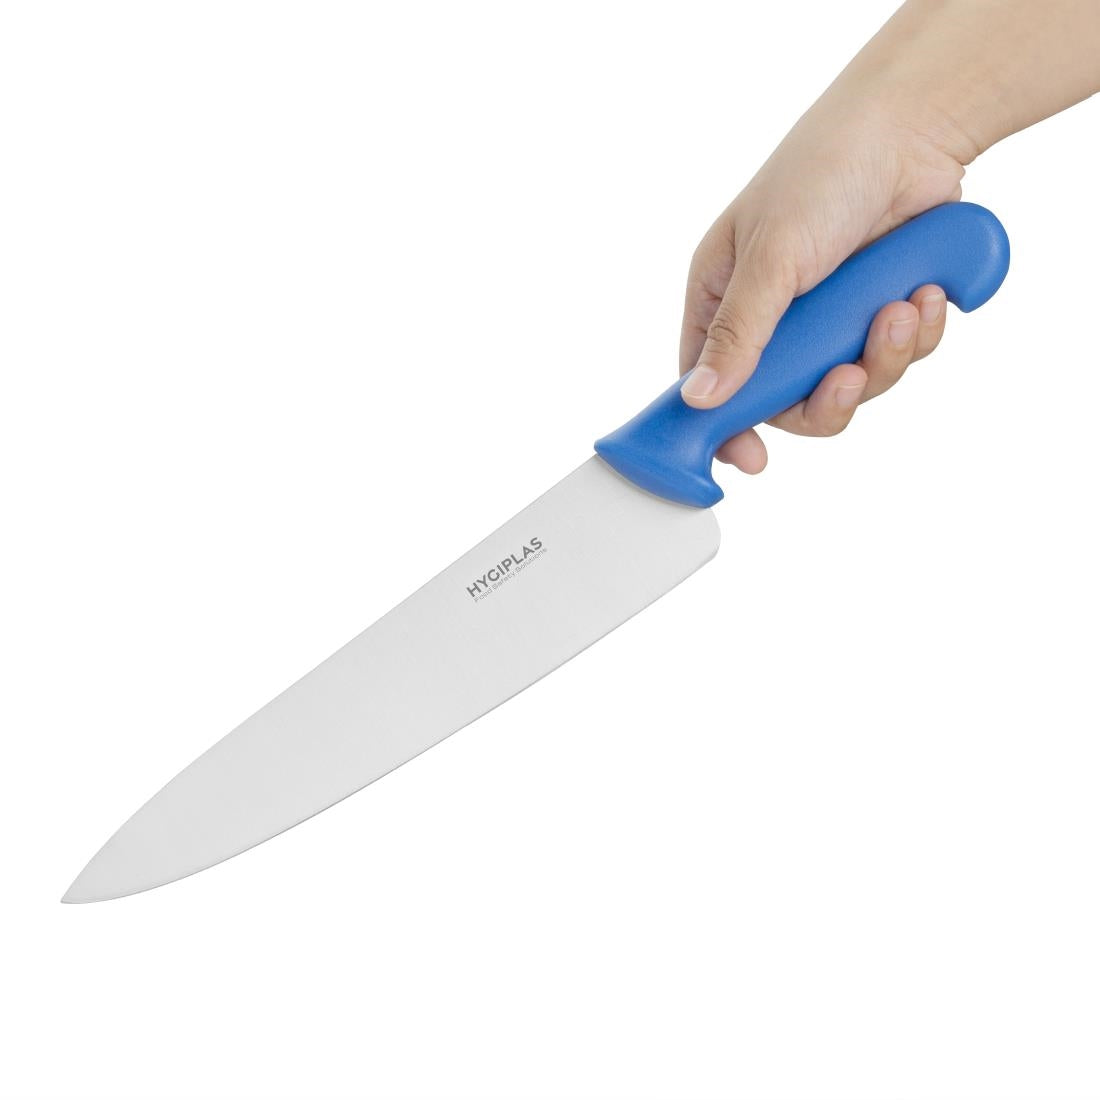 C850 Hygiplas Chefs Knife Blue 25.5cm JD Catering Equipment Solutions Ltd